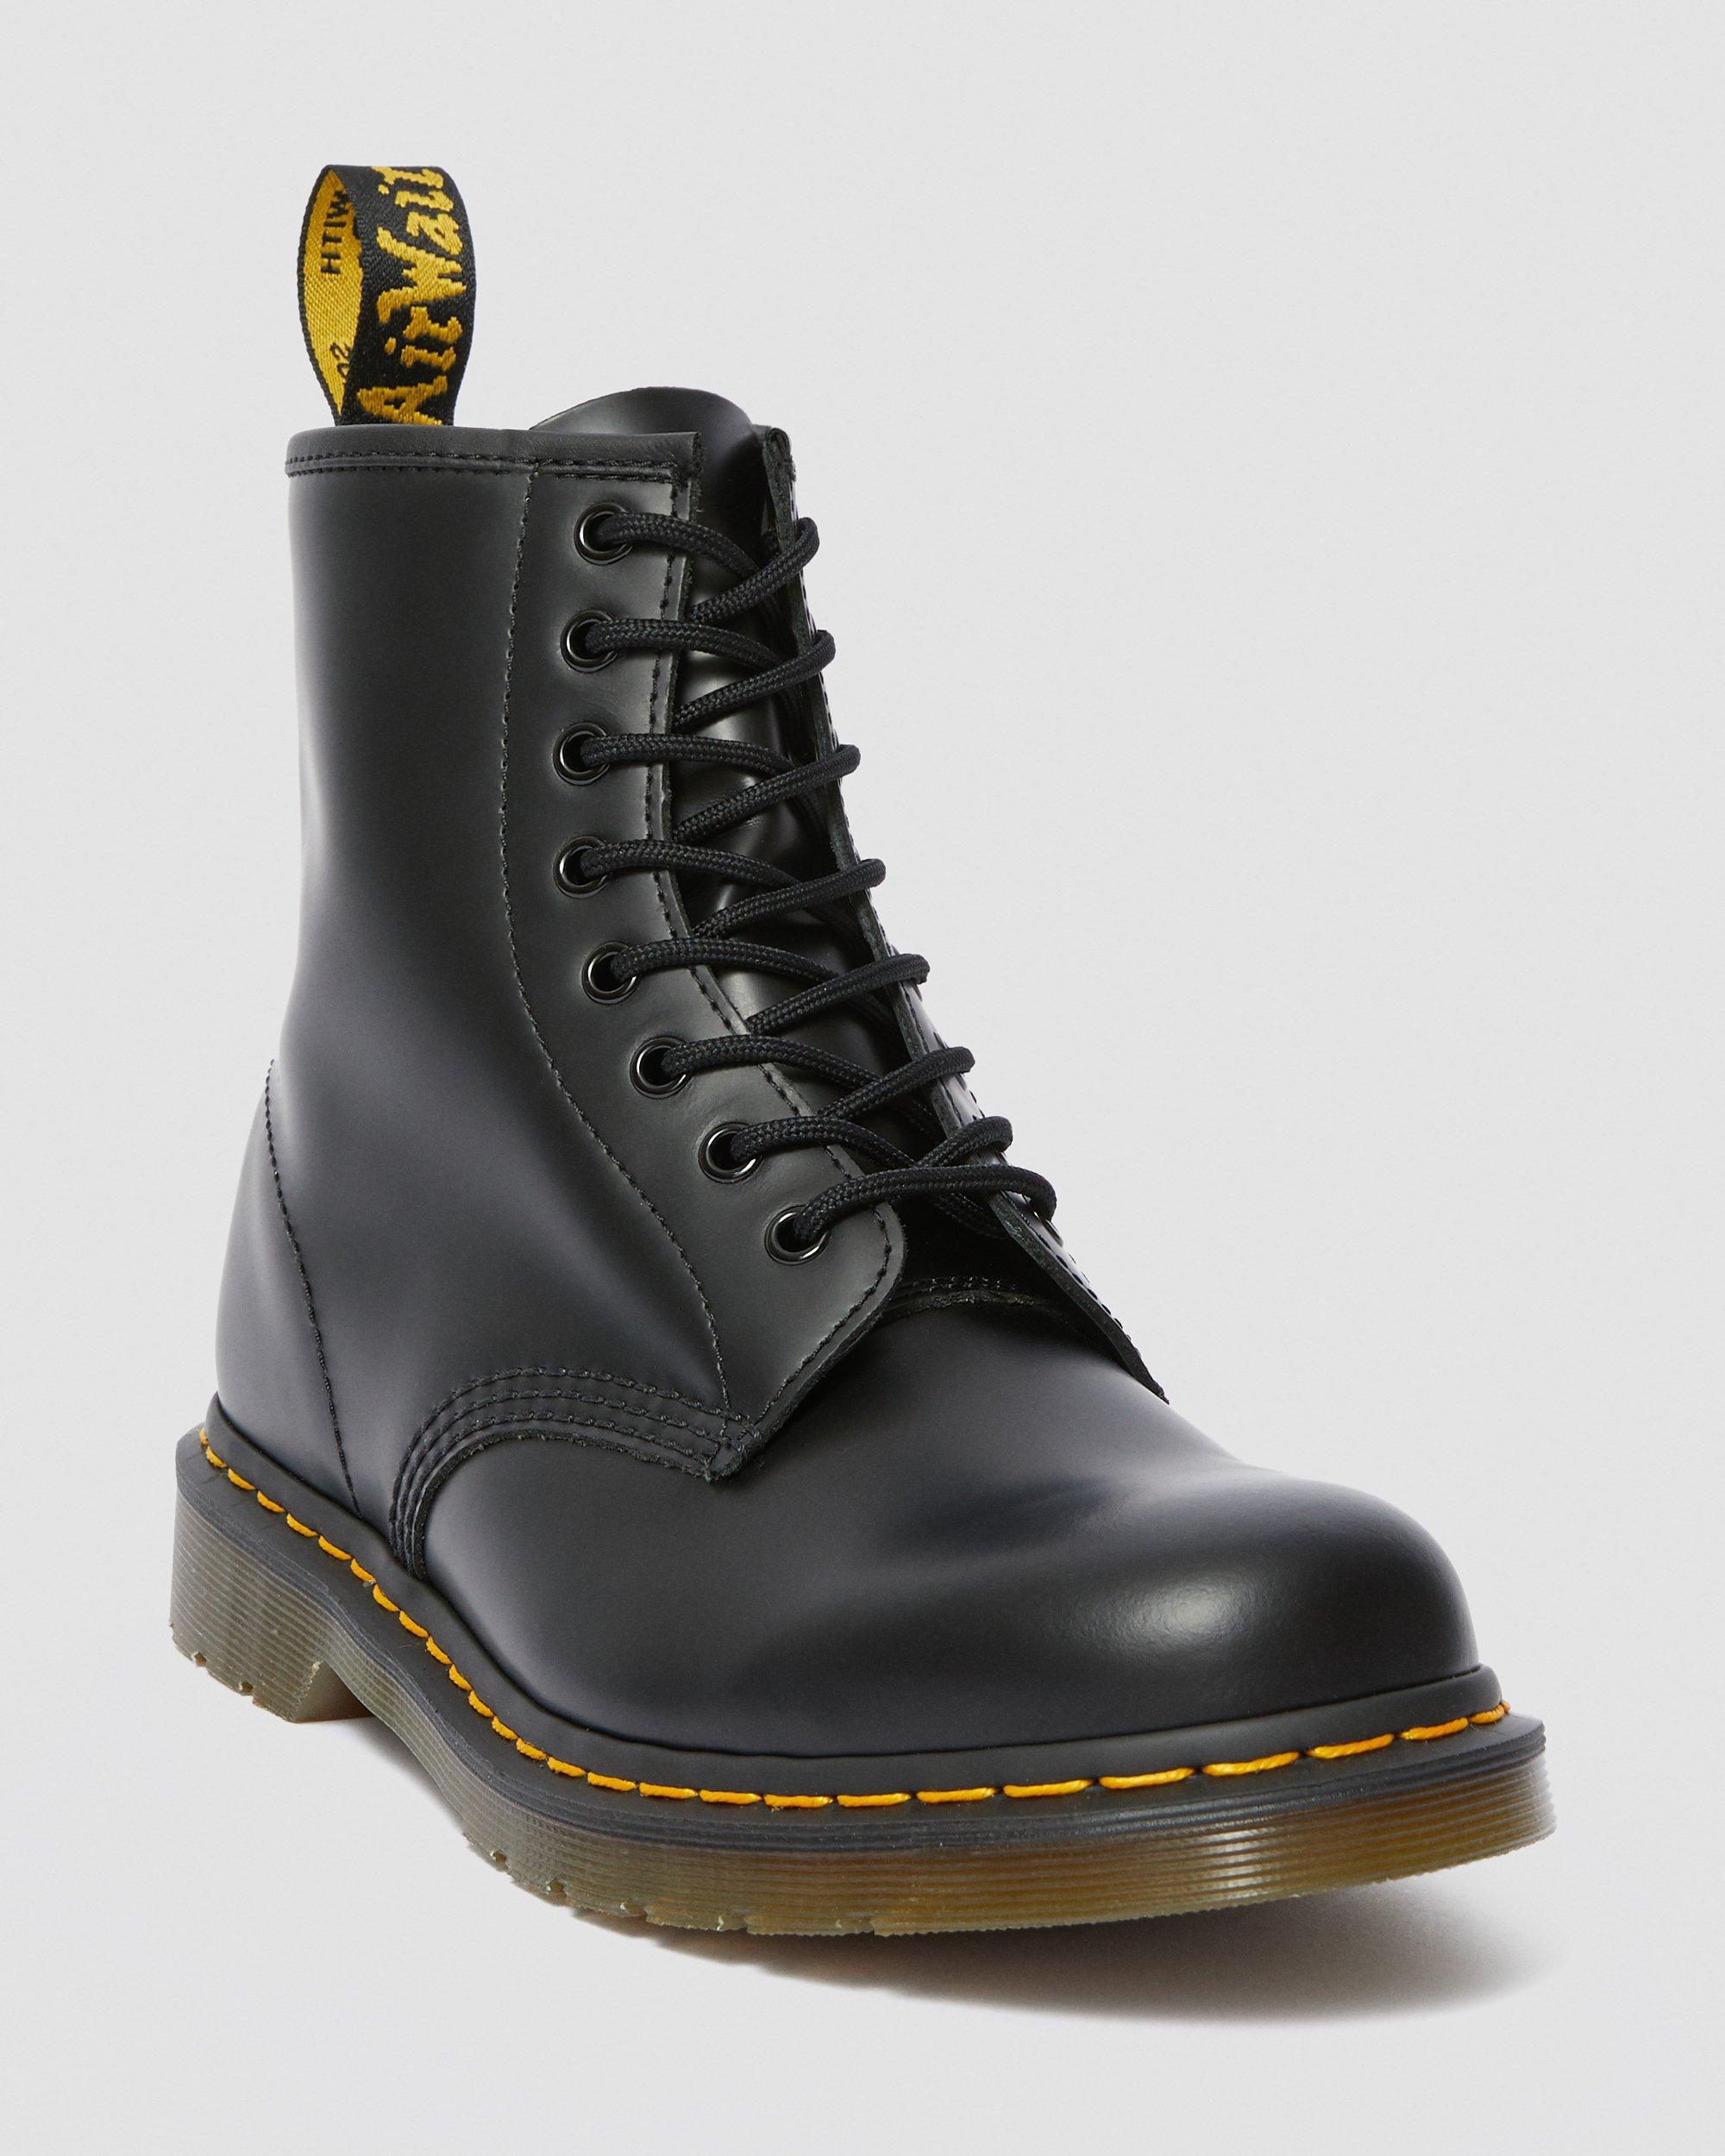 DR MARTENS 1460 Slip Resistant Leather Lace Up Boots